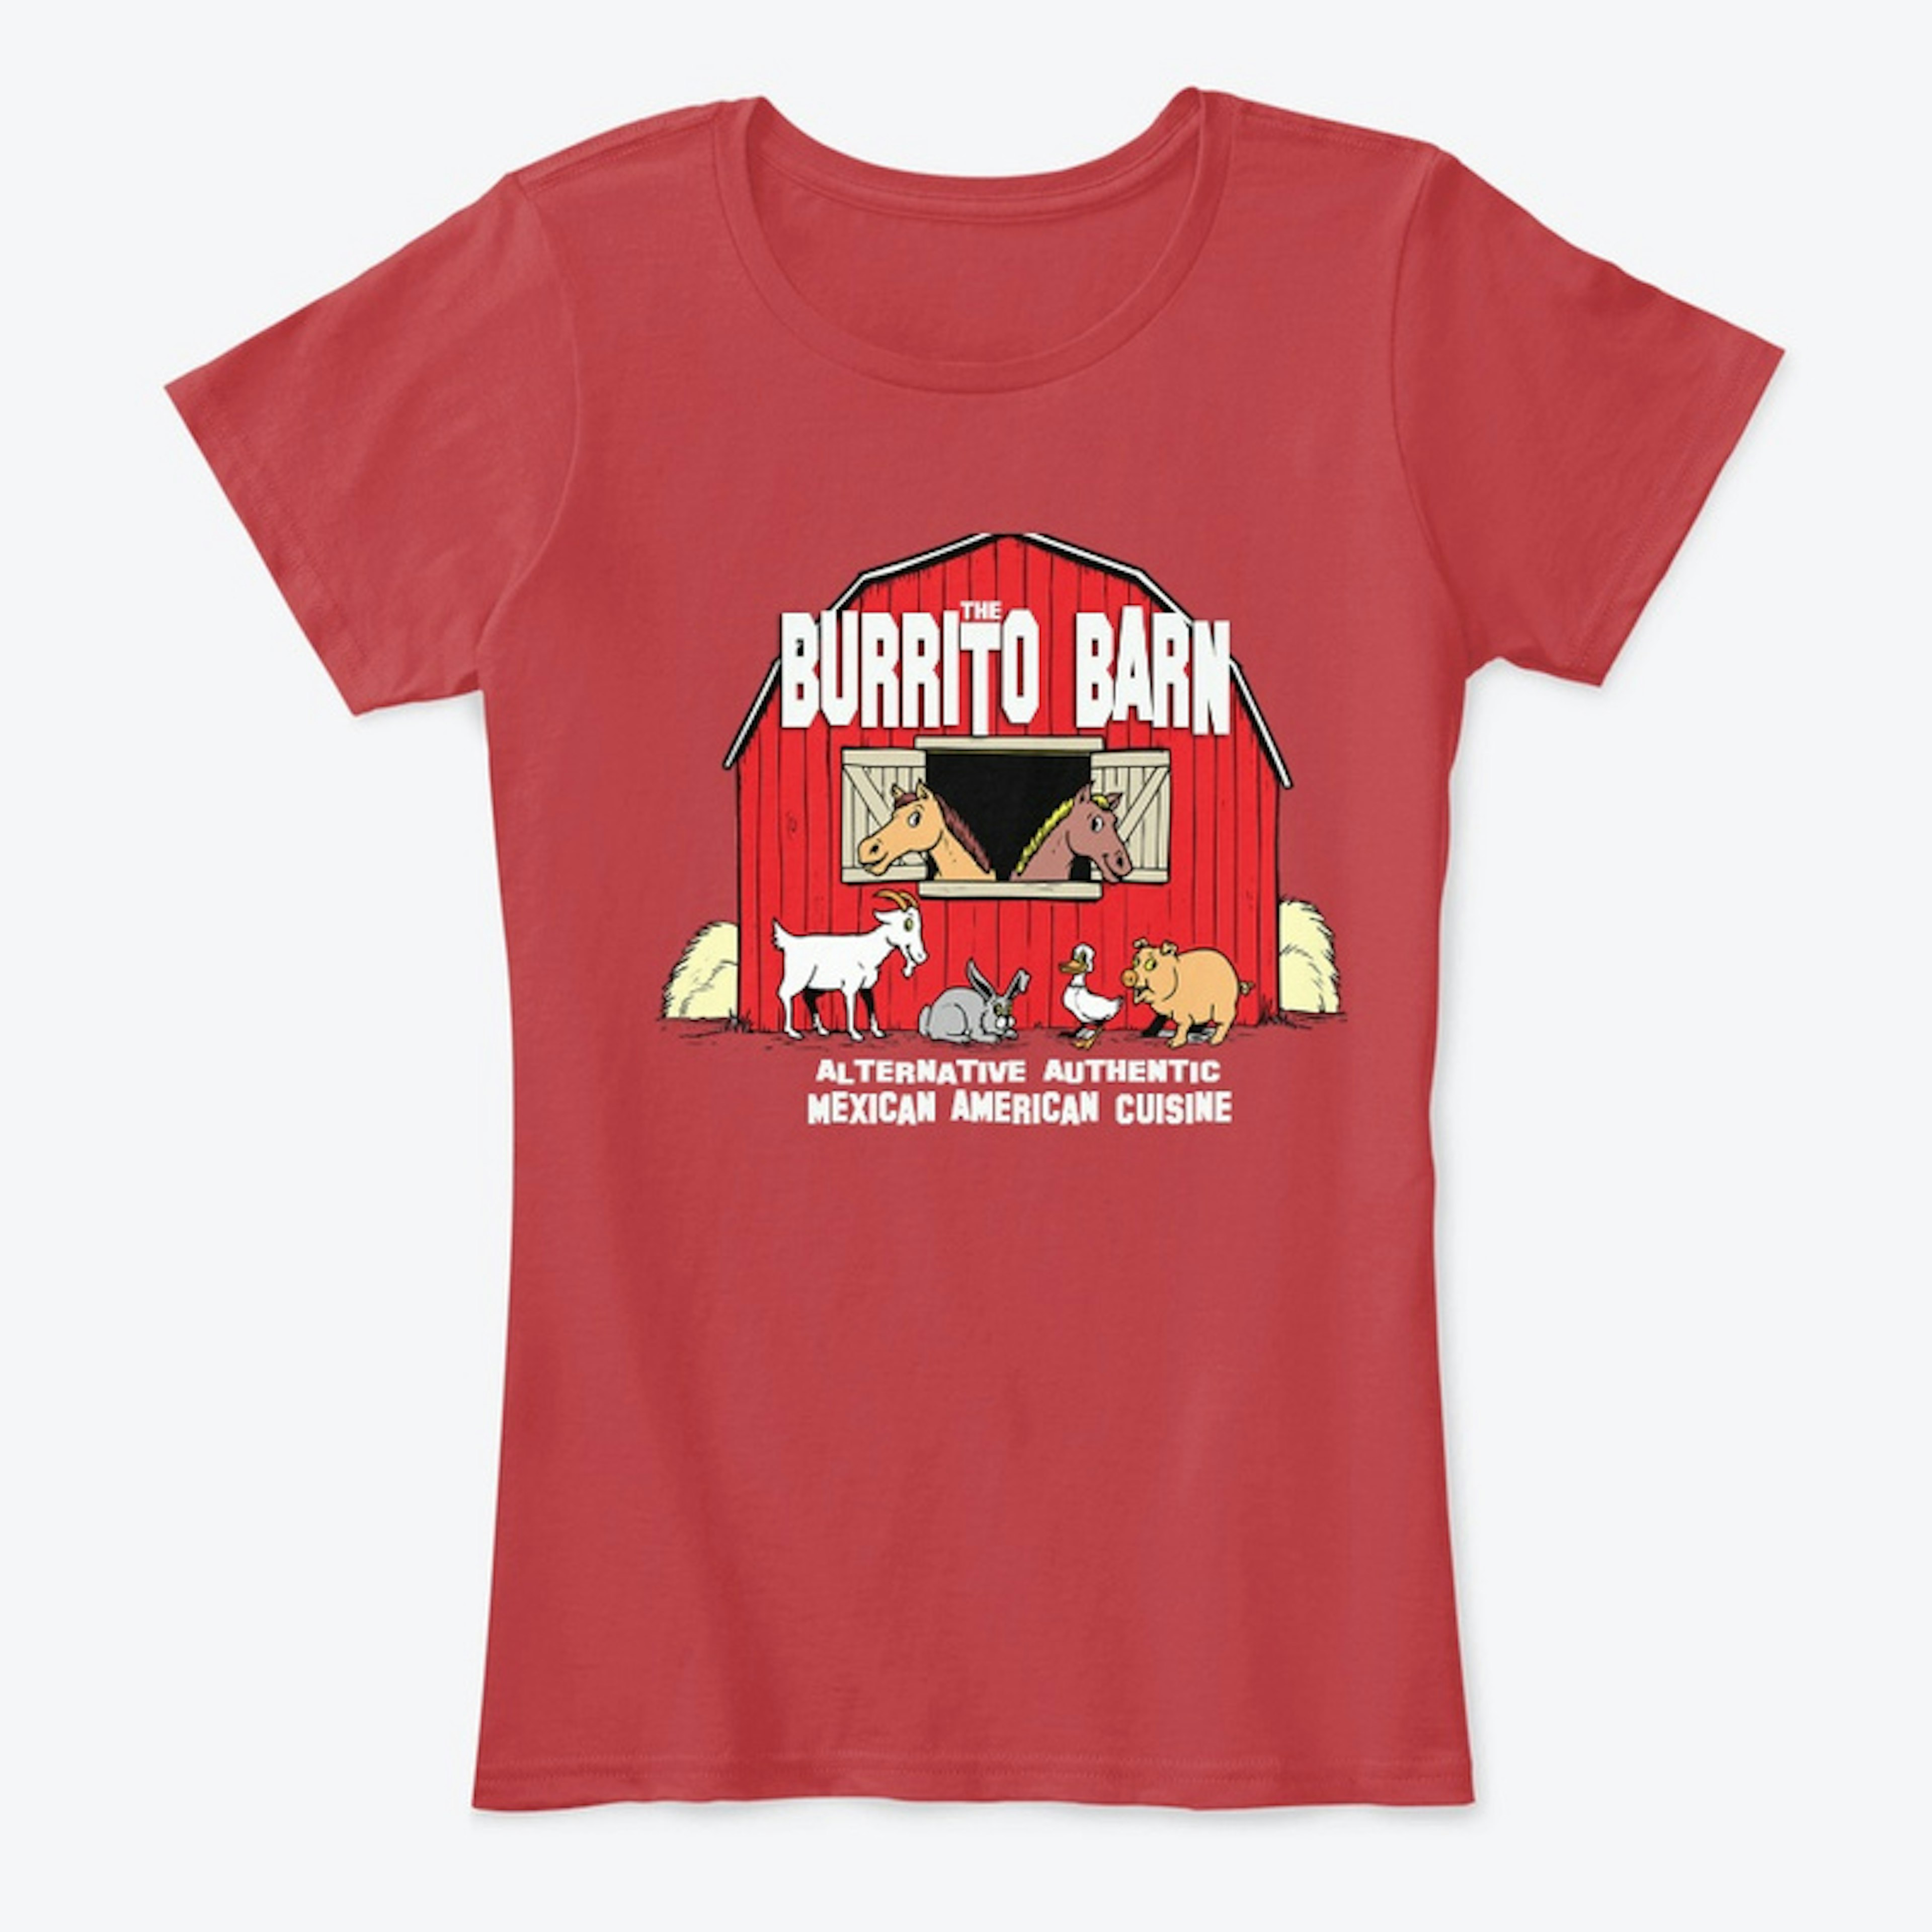 Burrito Barn Shirt